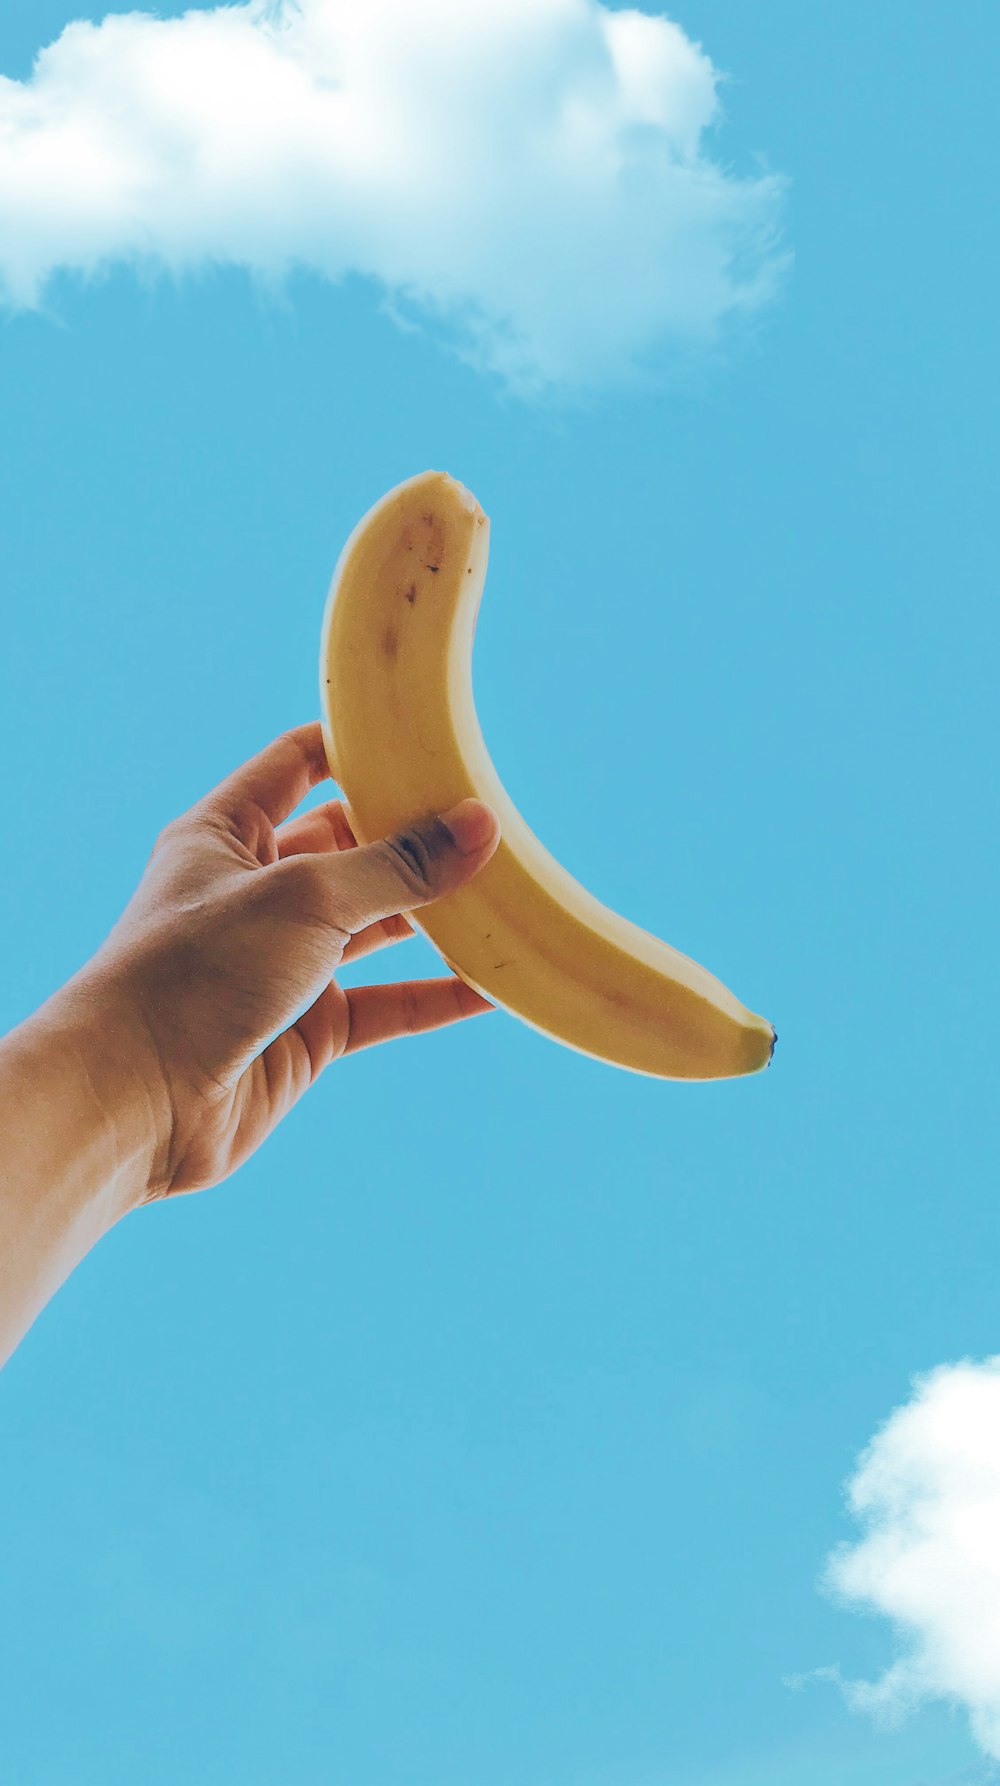 person holding yellow banana fruit